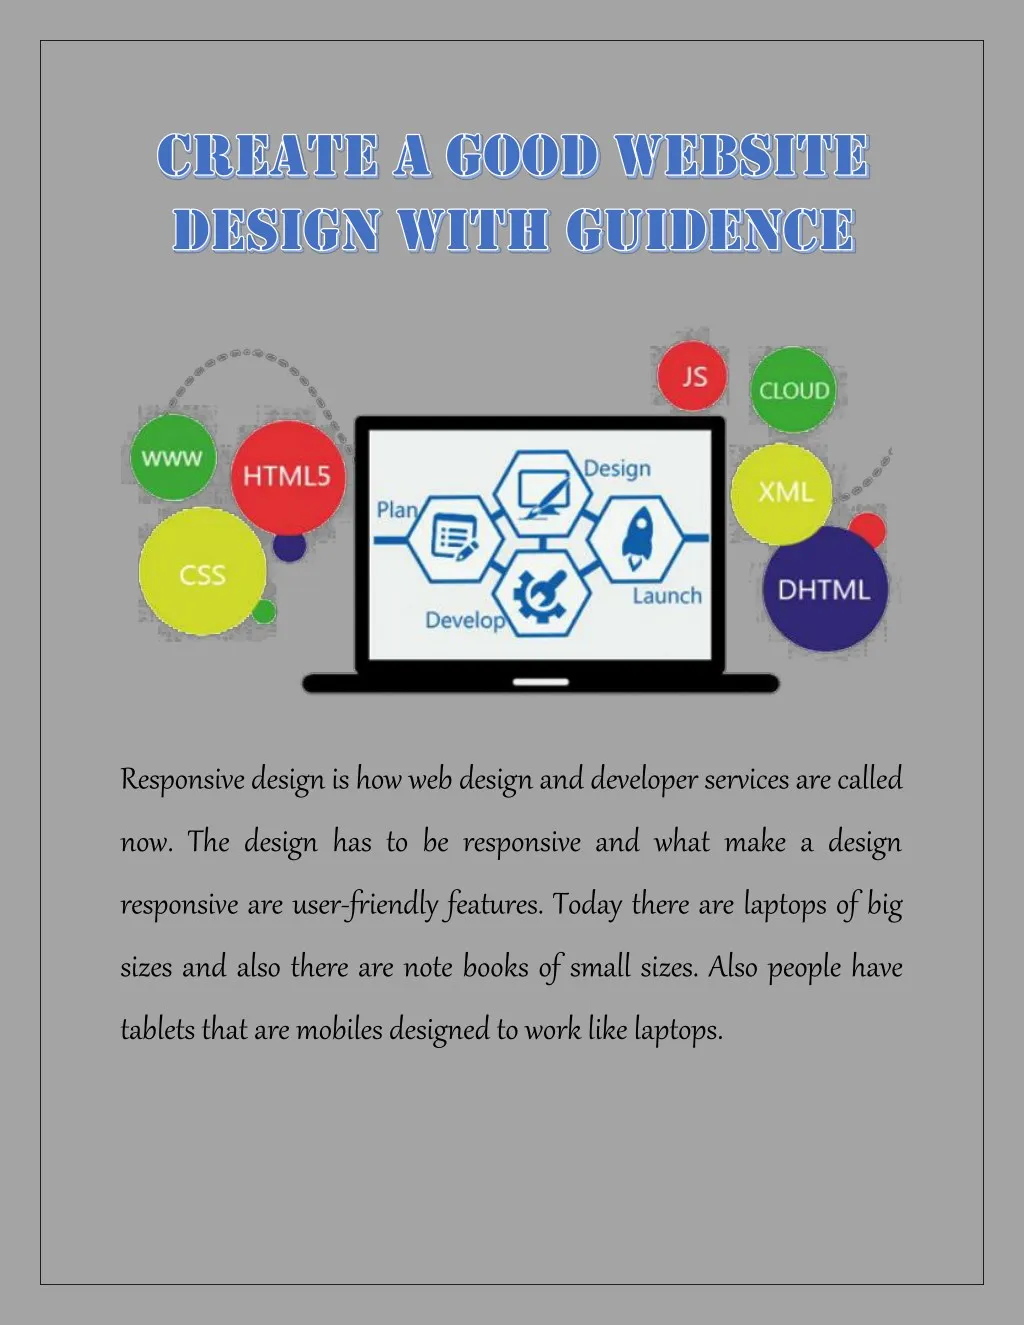 responsive design is how web design and developer